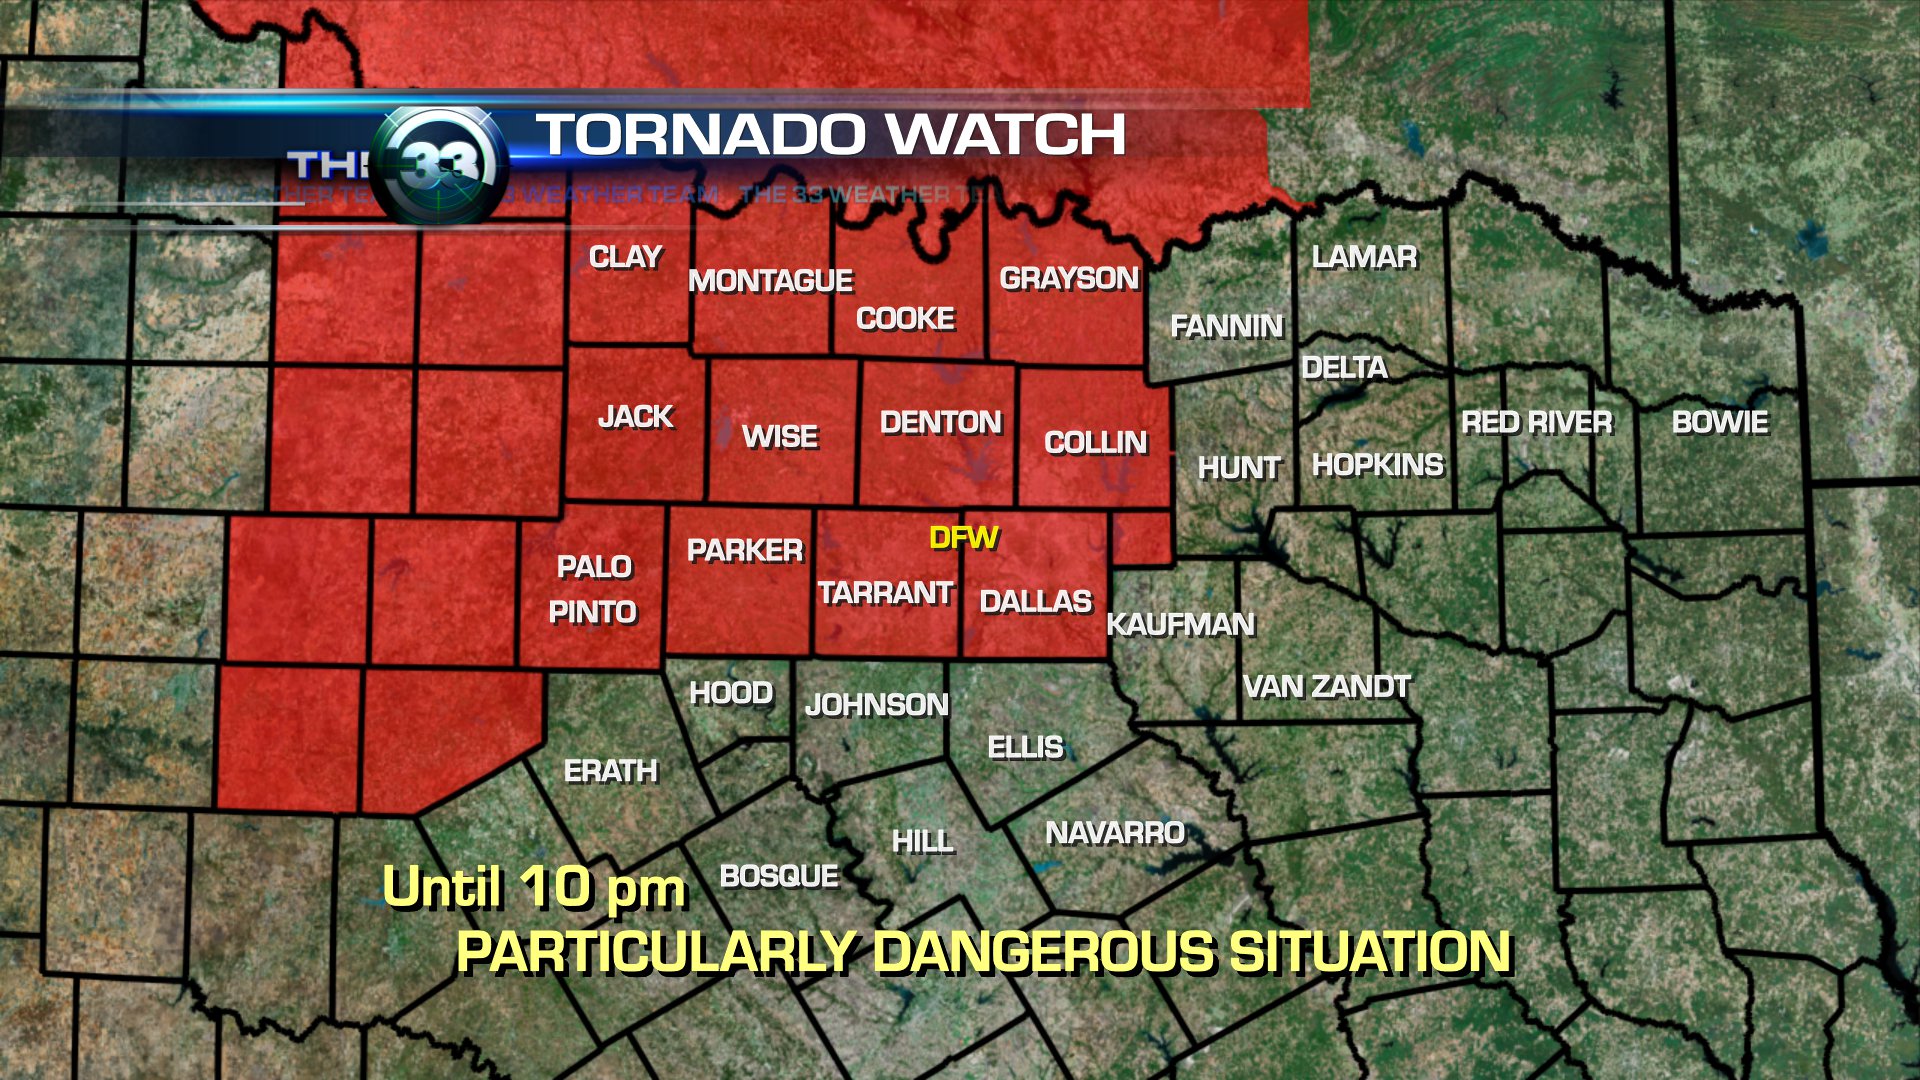 Tornado Watch in effect for Dallas-Tarrant-Parker-Palo Pinto-Rockwall-Kaufman counties ...1920 x 1080